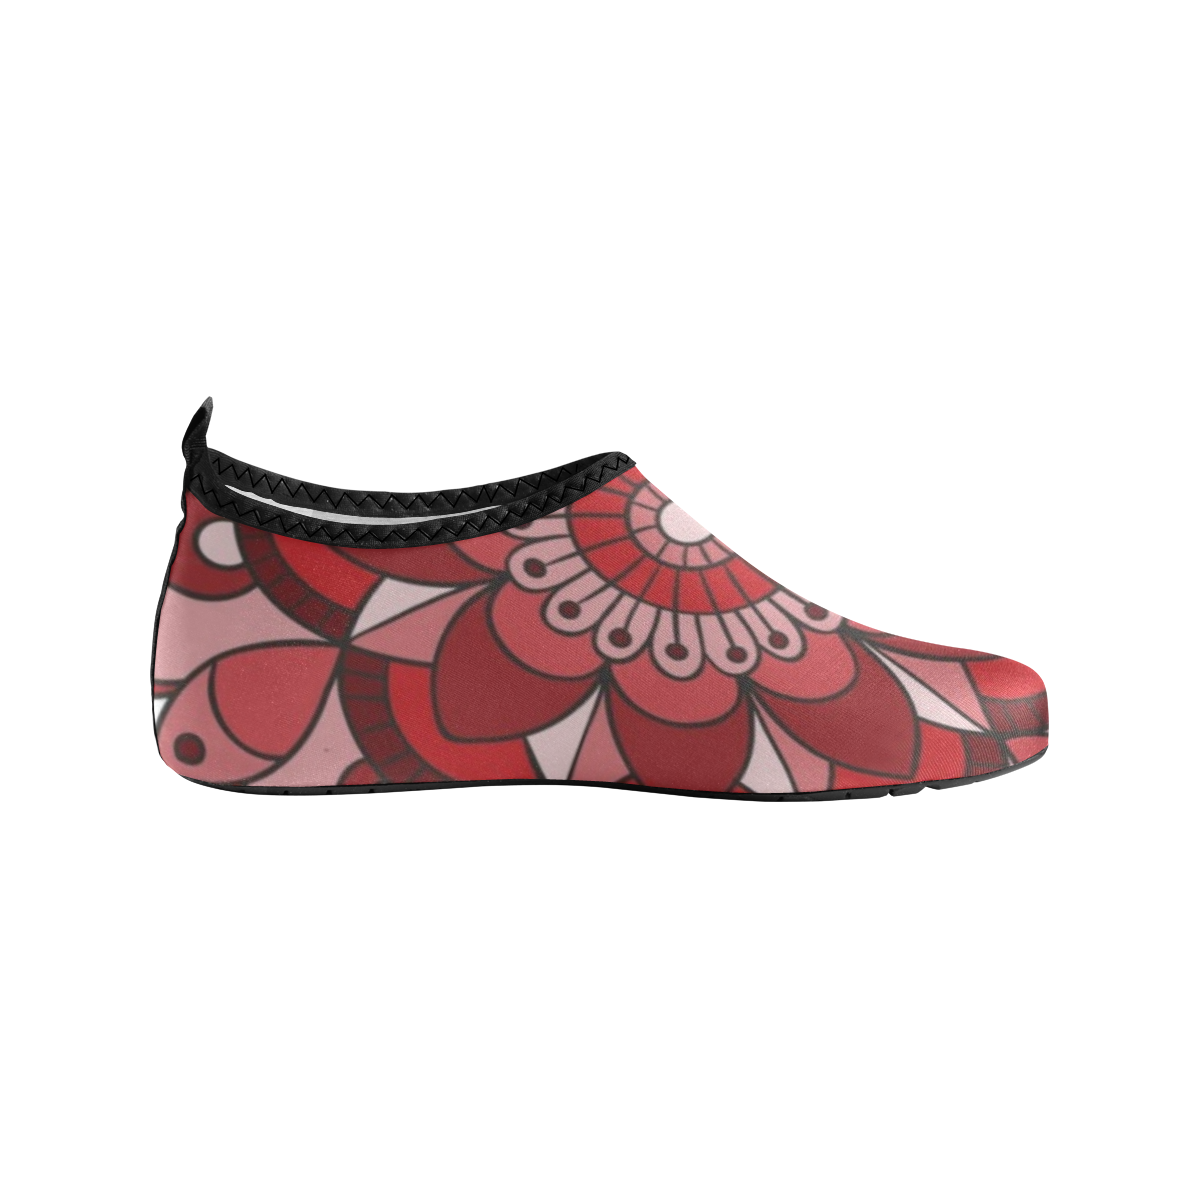 MANDALA HIBISCUS BEAUTY Women's Slip-On Water Shoes (Model 056)